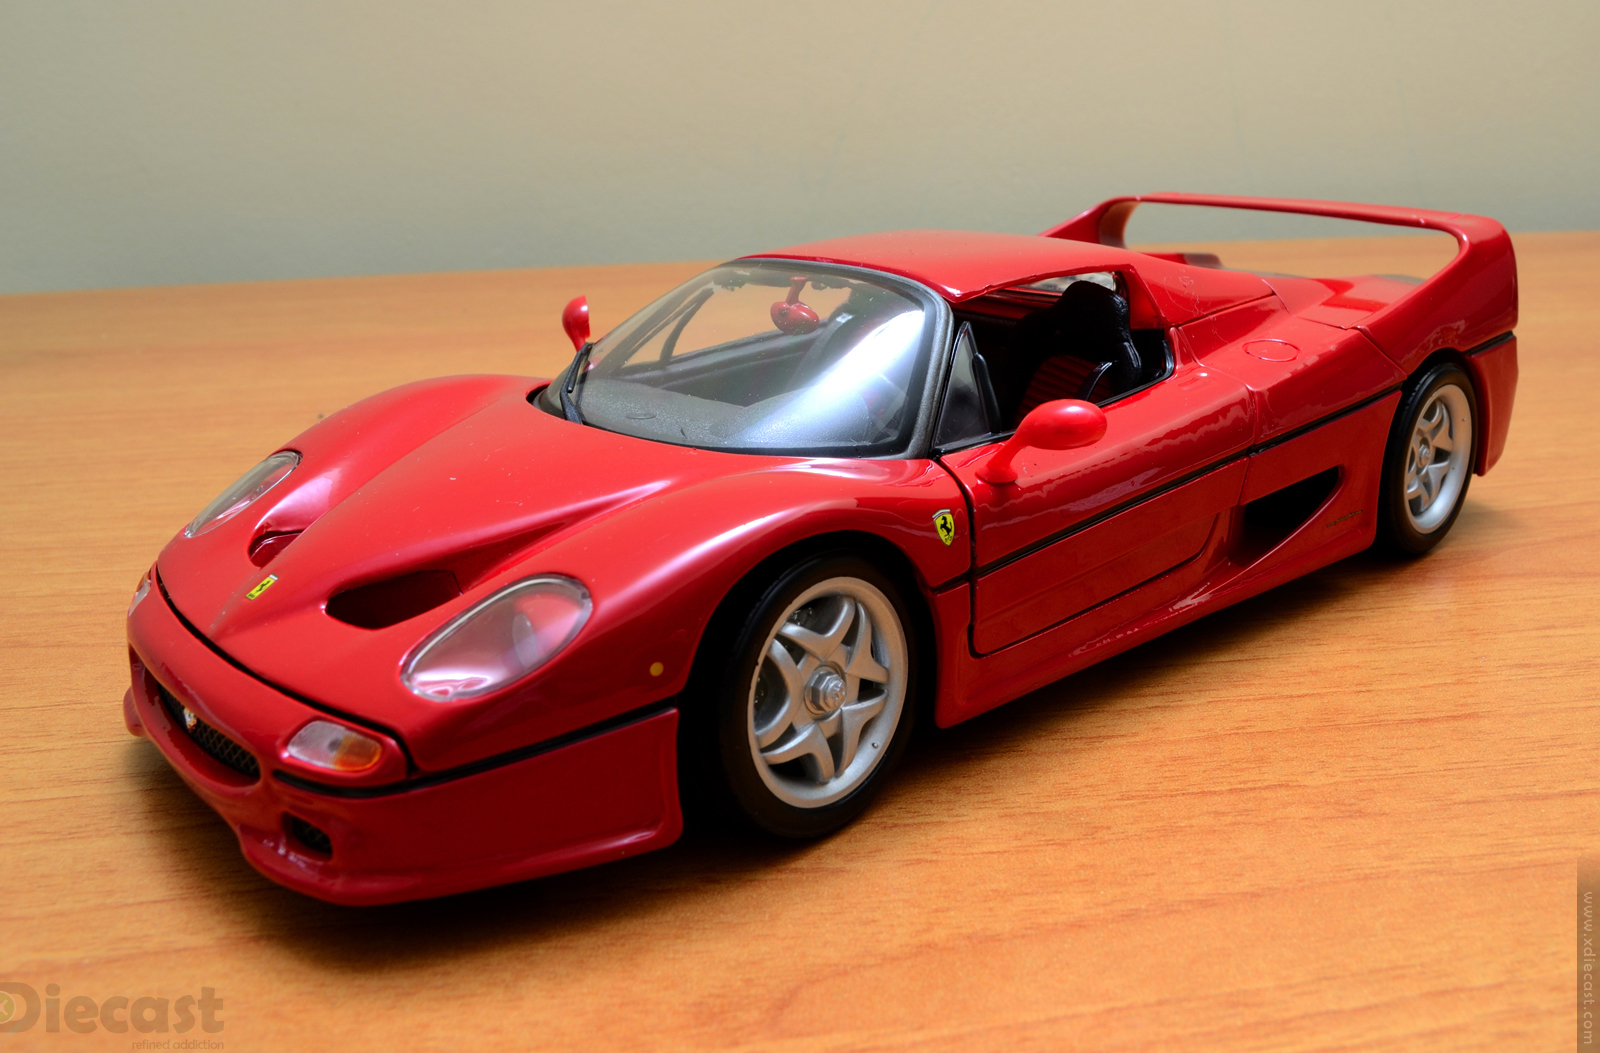 Tomica Presents Bburago Race & Play 3inch Die-cast Mini Car Ferrari F50 Red MISB for sale online